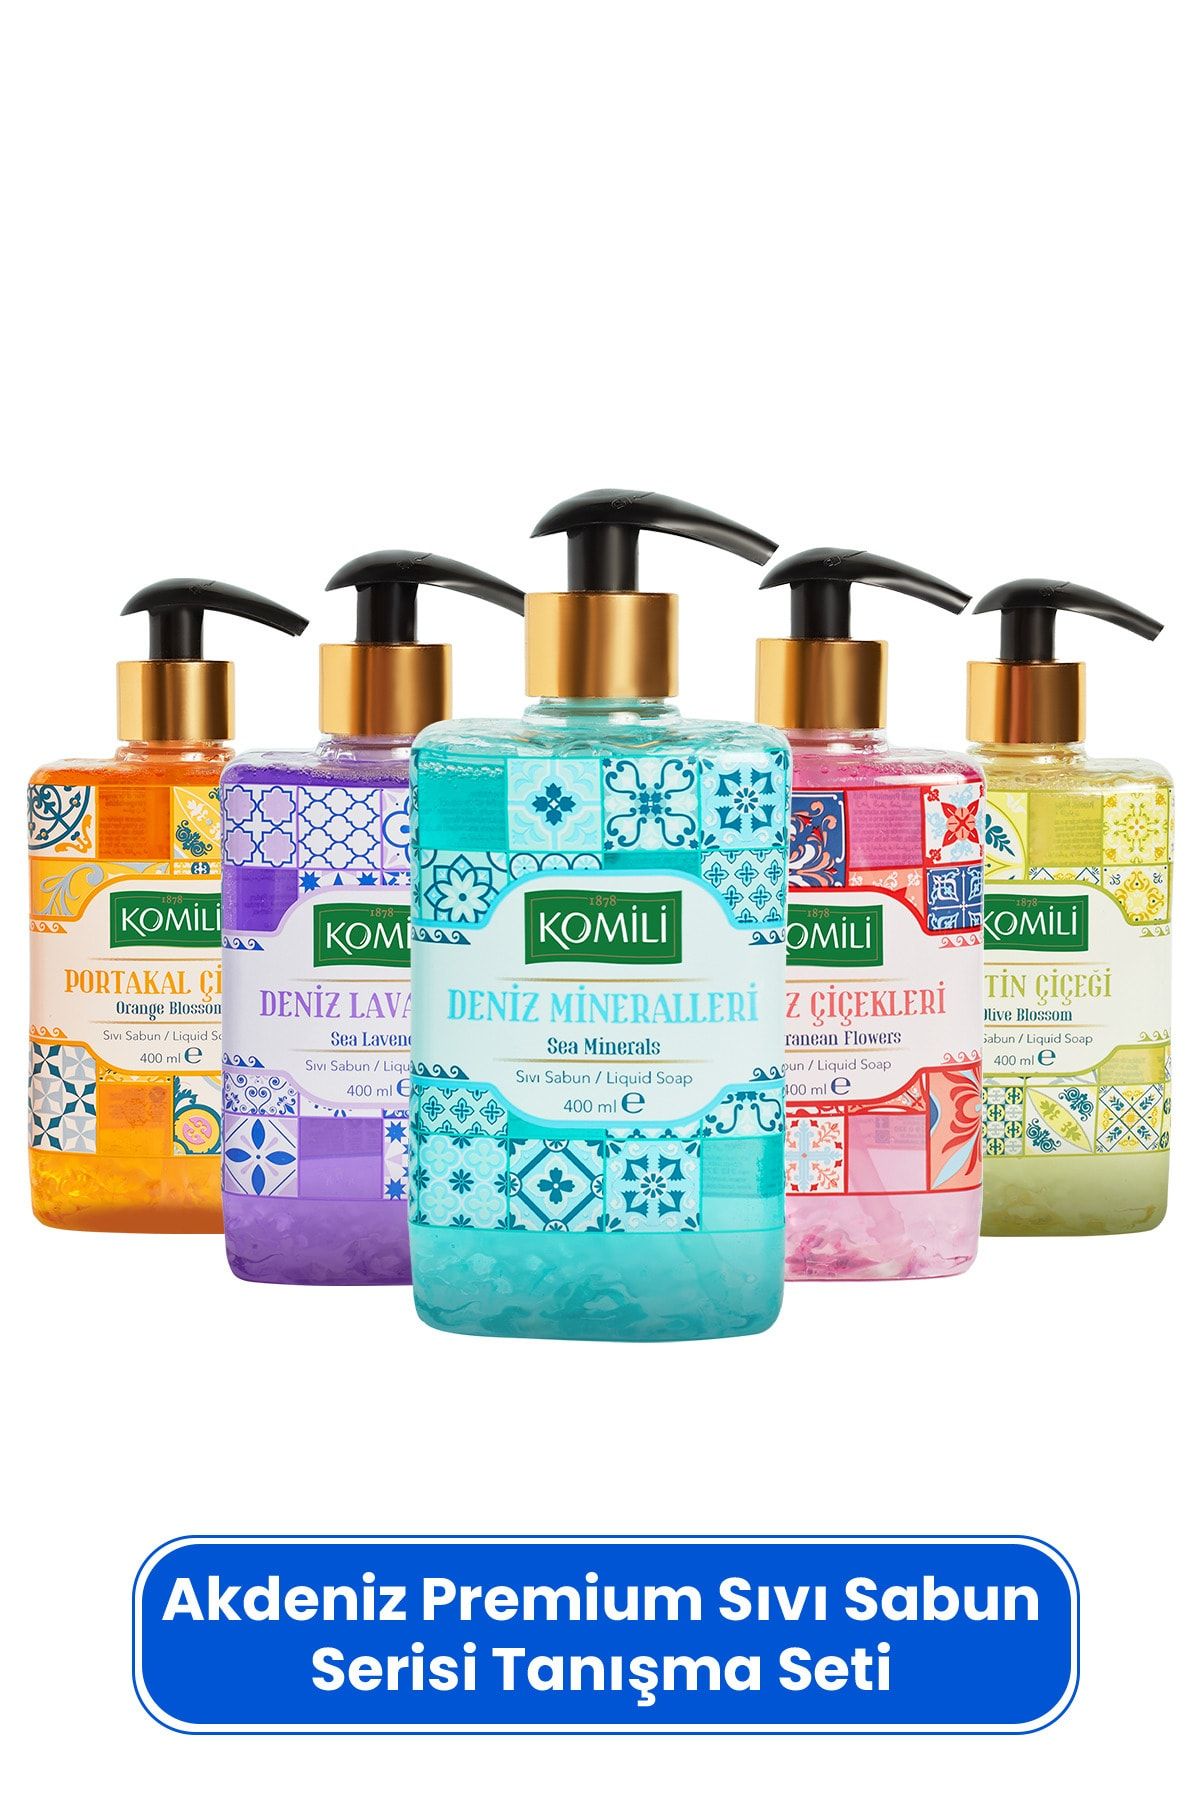 Komili Premium Sıvı Sabun Tanışma Paketi - 5 X 400 ml